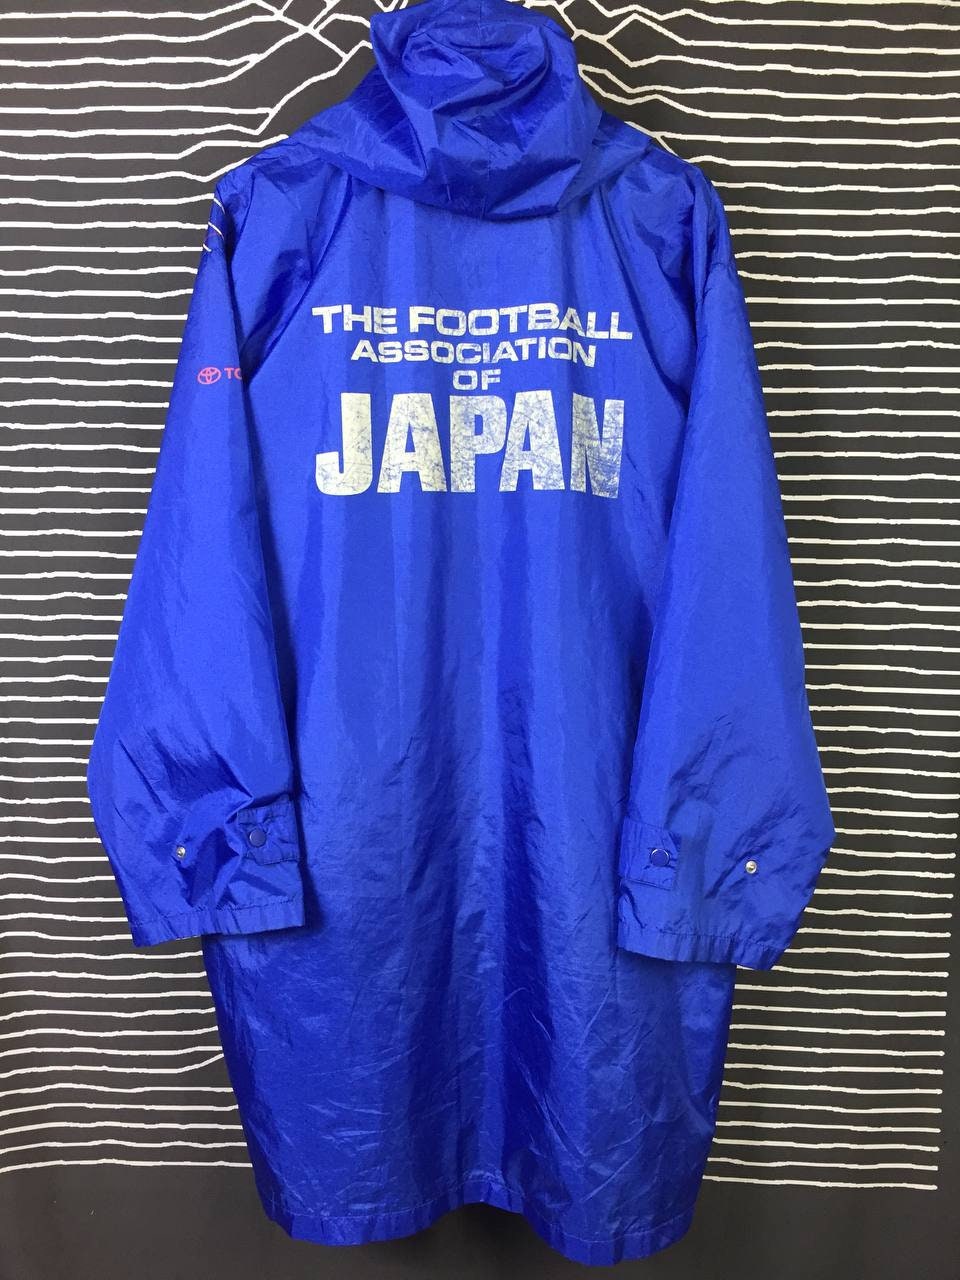 Windbreaker Streetwear / Skates T 90s Association /blokecore Etsy Shirt / Hip Japan Hop Jacket - 90s Vtg JFA Long / Football XL Size